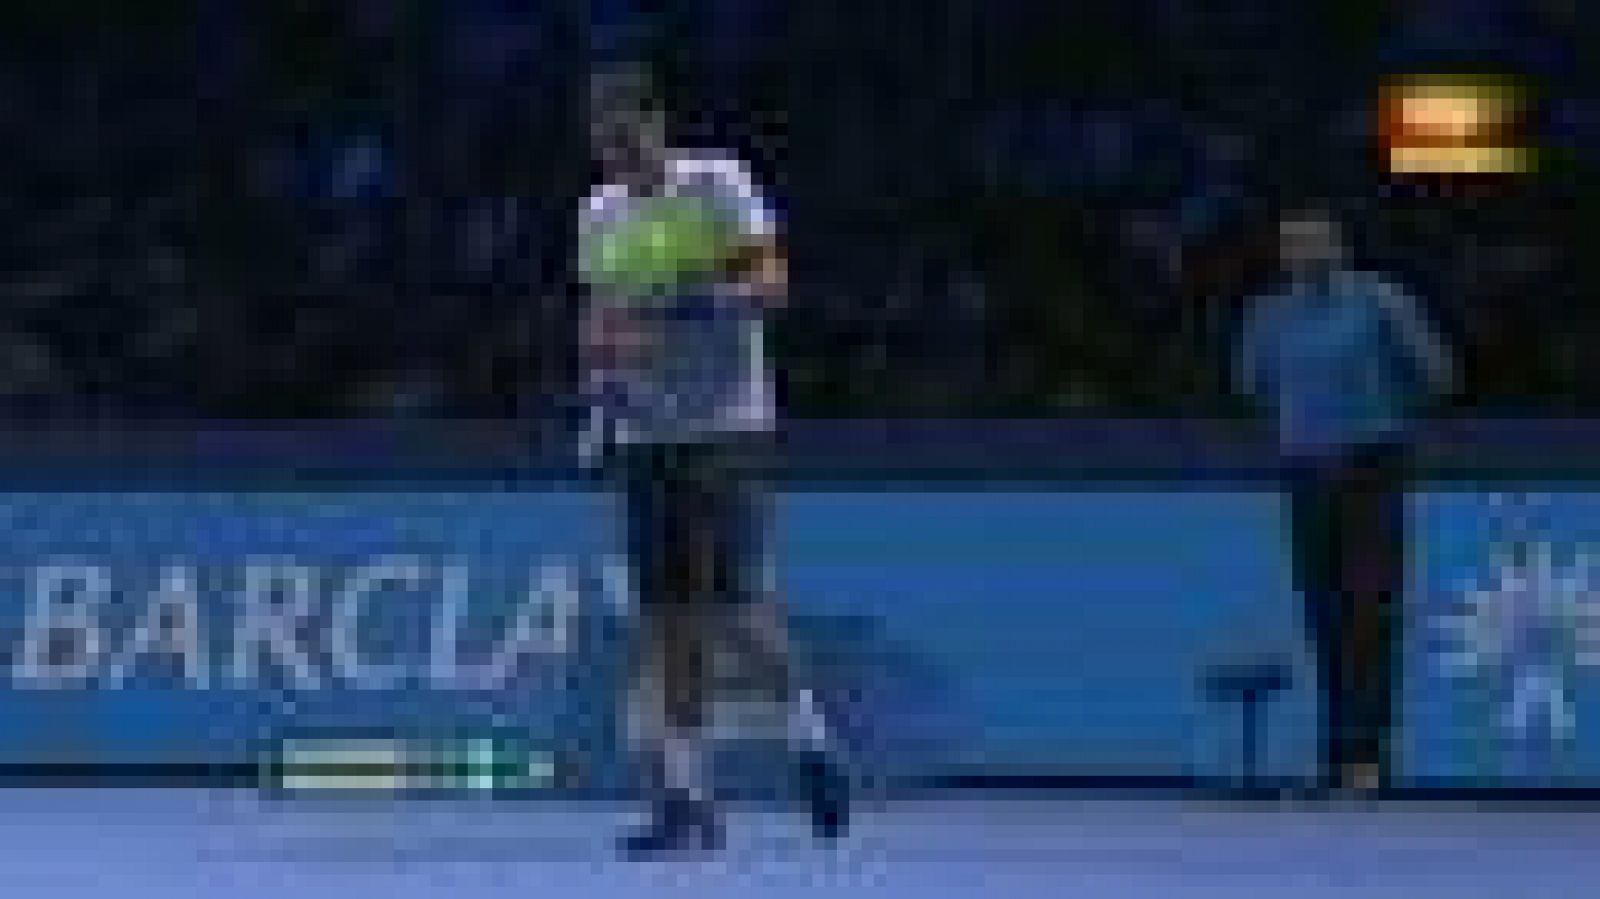 Sin programa: Lección magistral de Djokovic a Berdych | RTVE Play